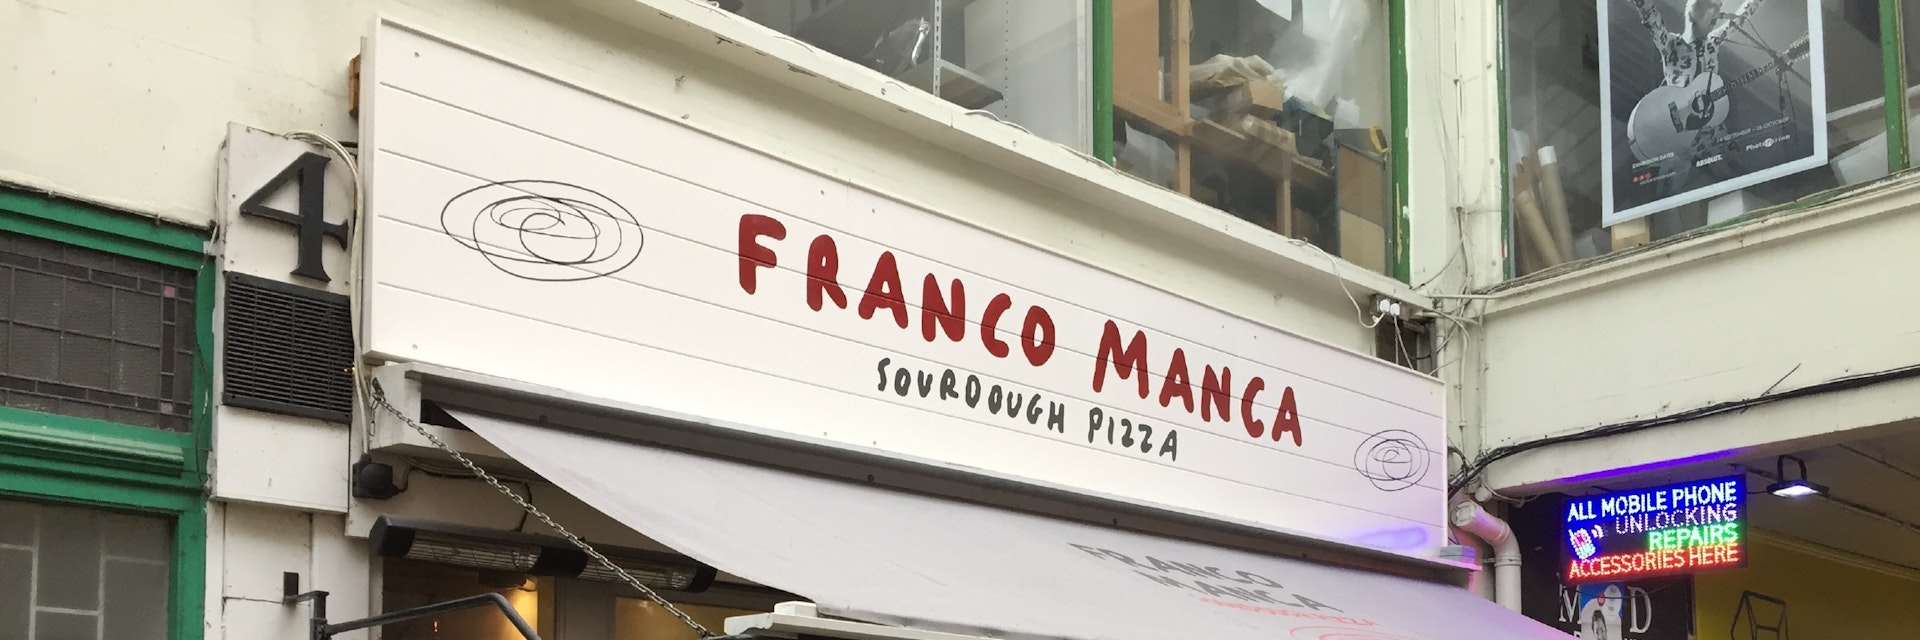 The exterior of Franco Manca in Brixton